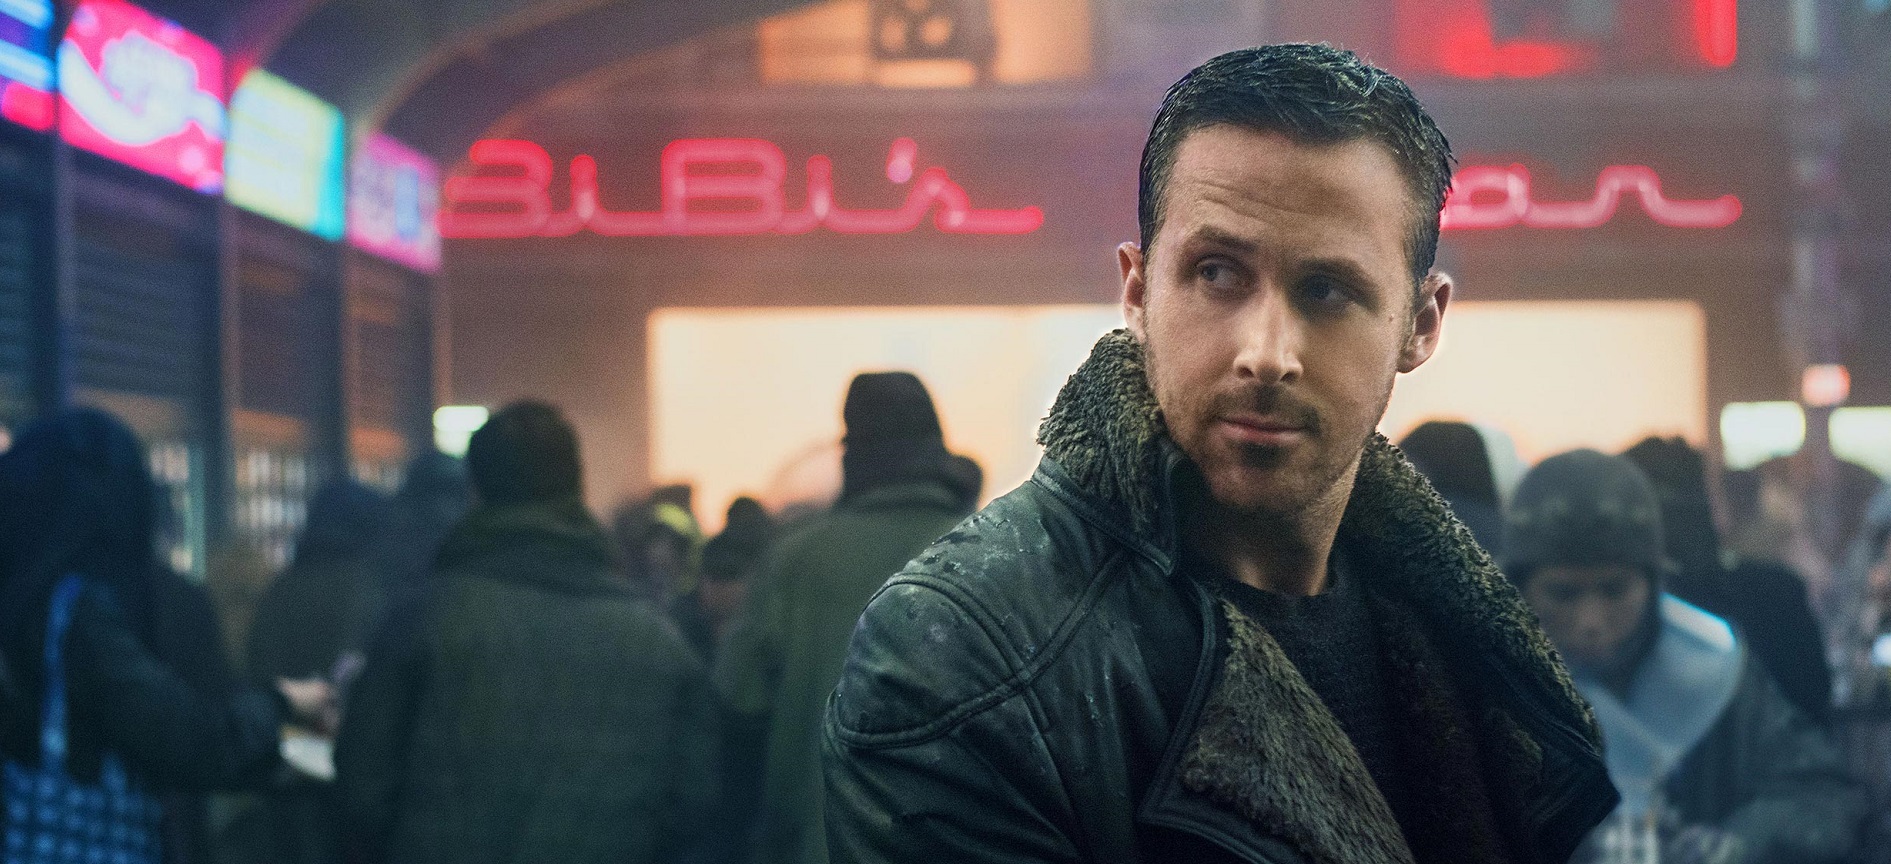 Blade Runner 2049 Movie Images ryan gosling